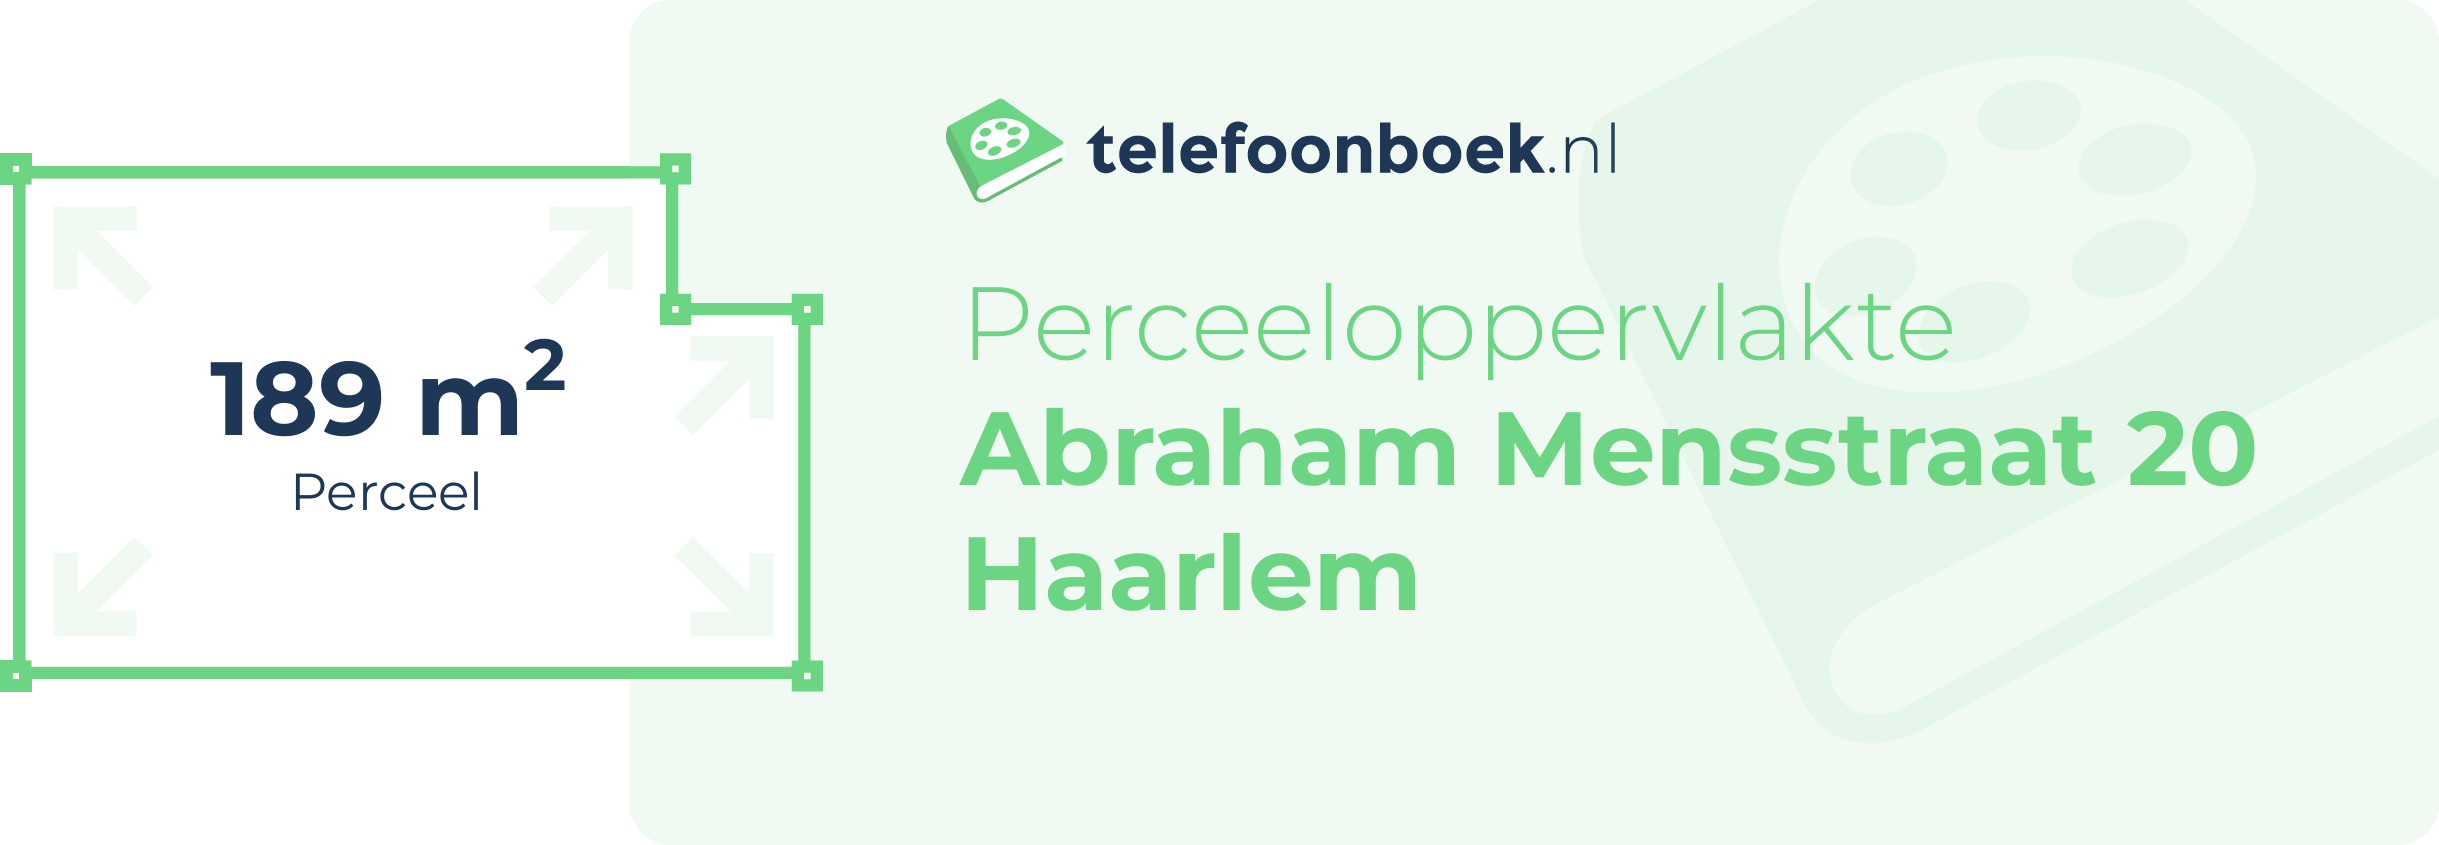 Perceeloppervlakte Abraham Mensstraat 20 Haarlem